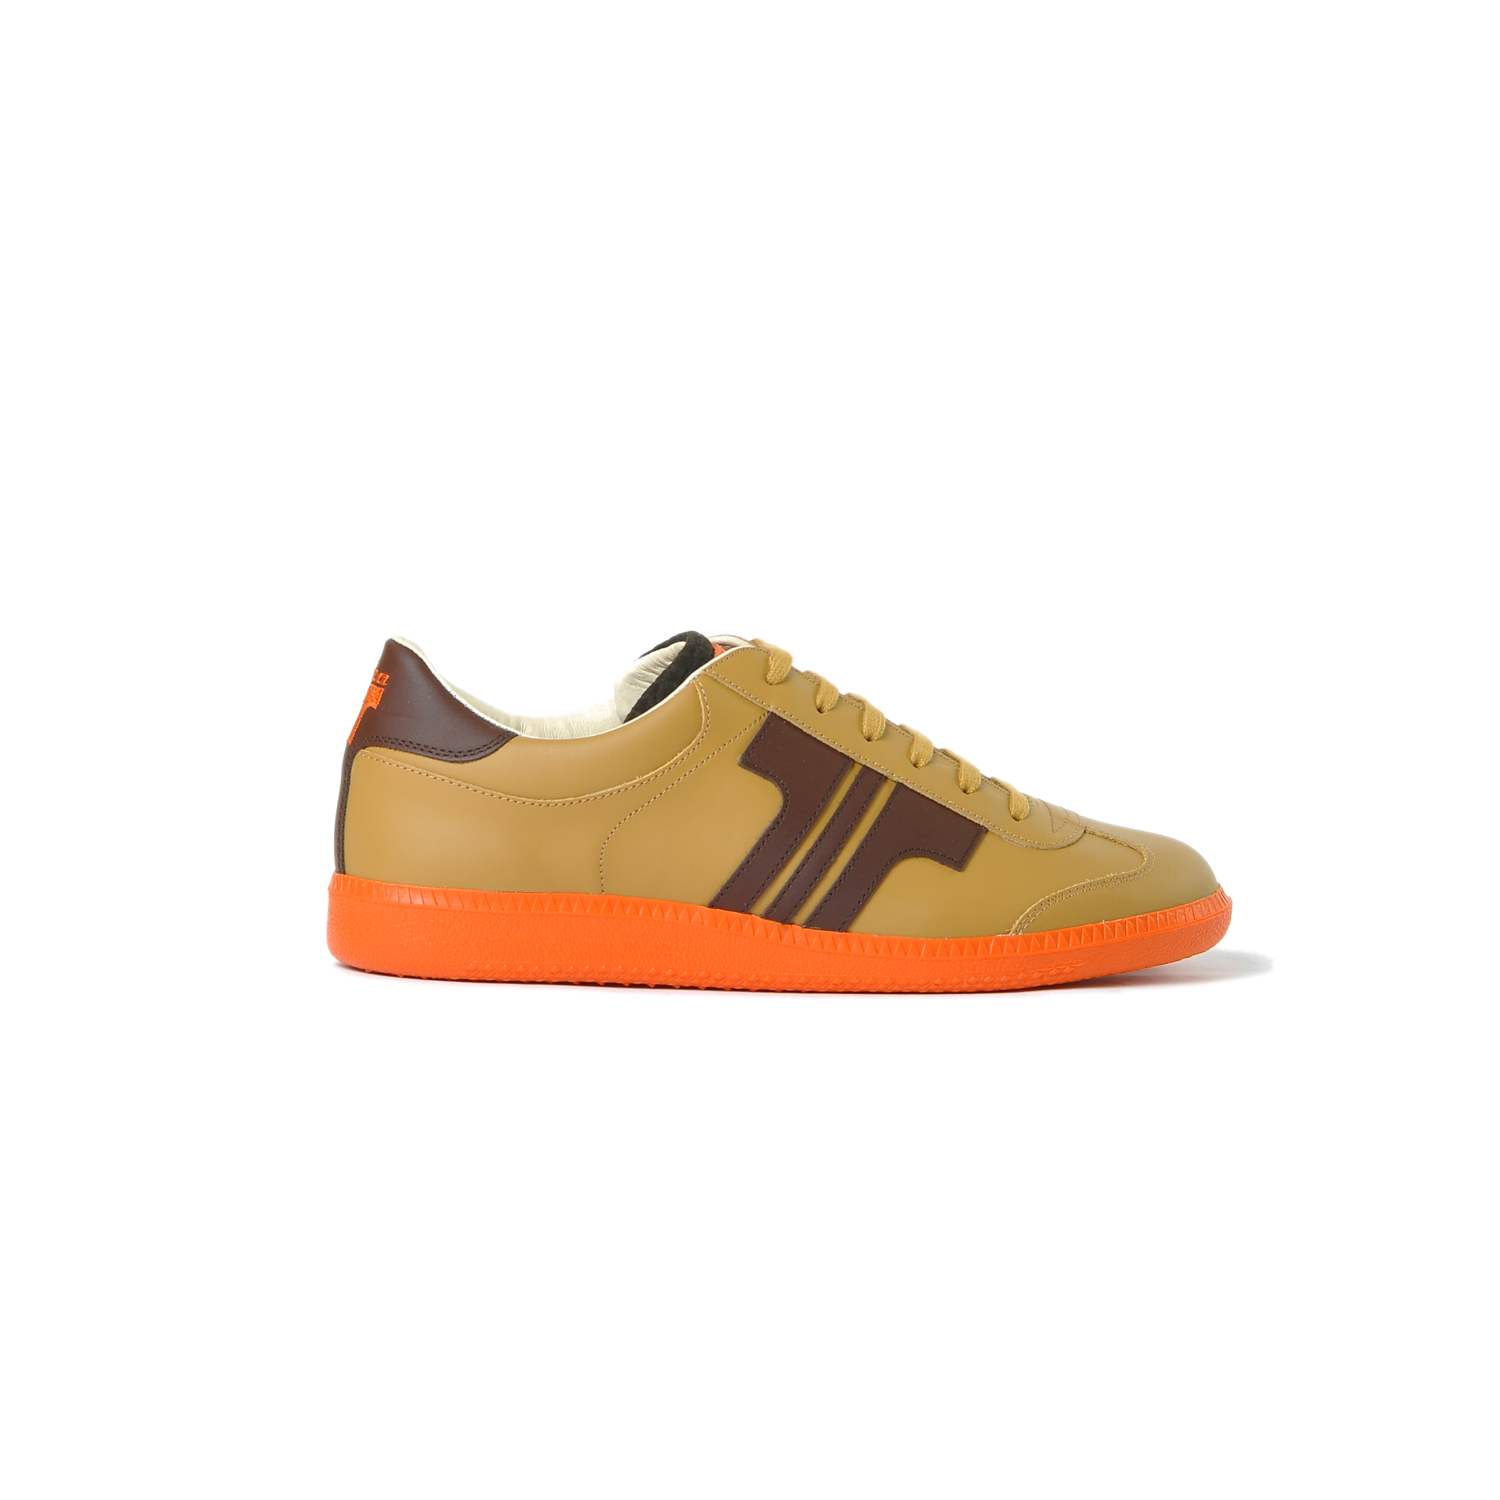 Tisza shoes - Compakt - Sand-brown